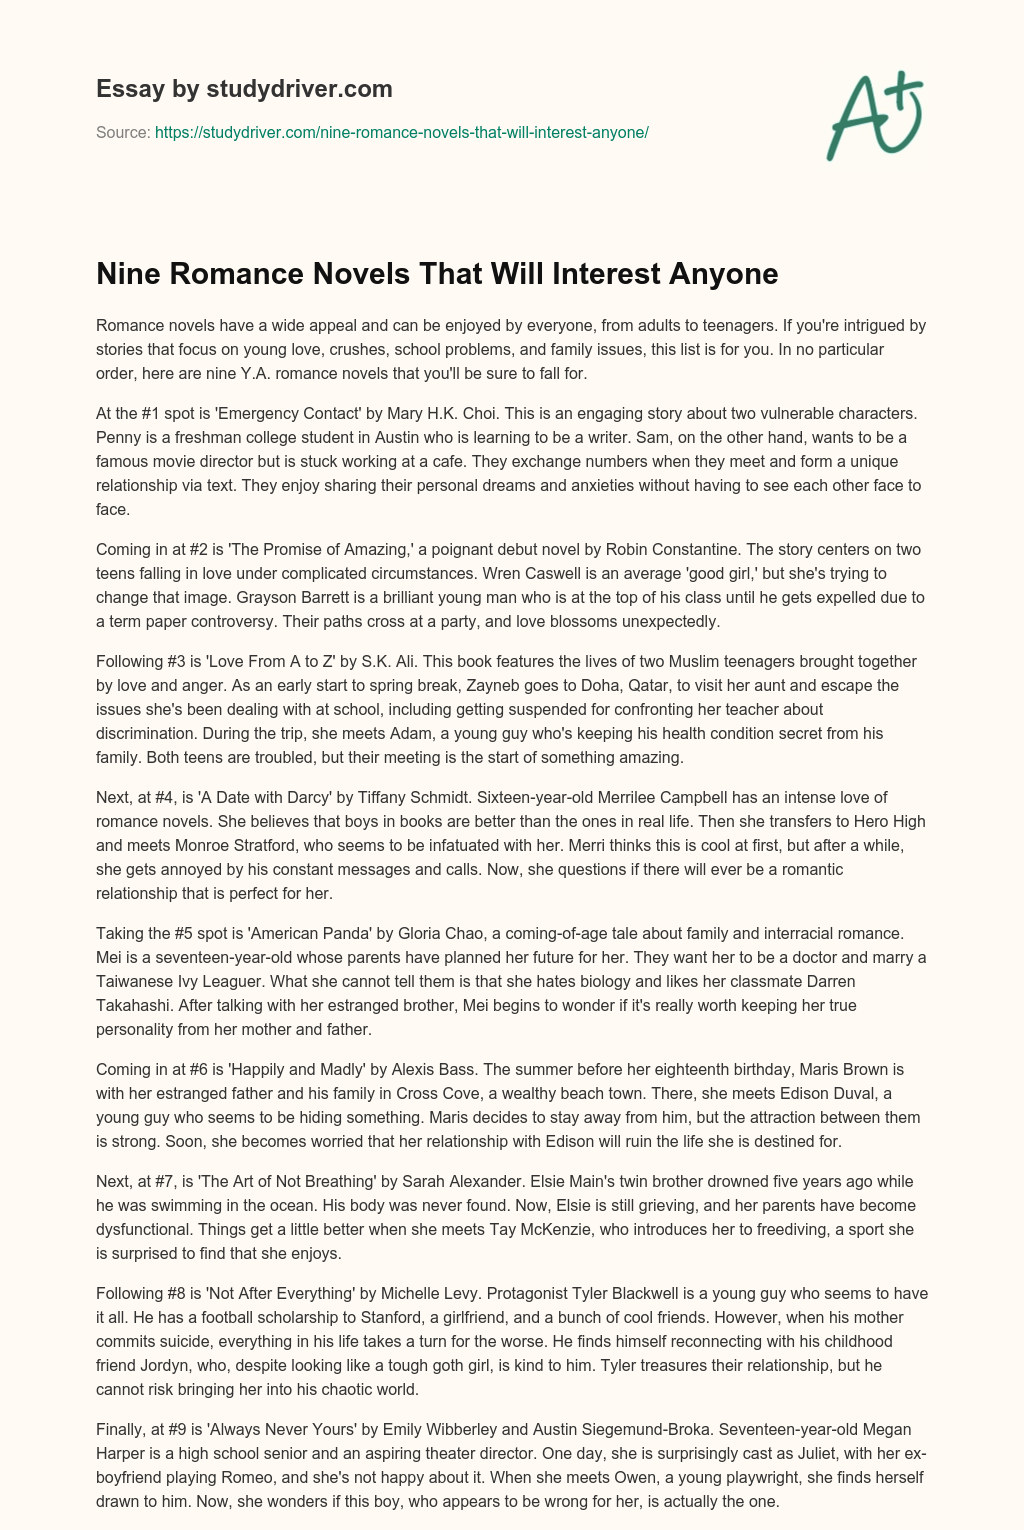 Nine Romance Novels that Will Interest Anyone essay